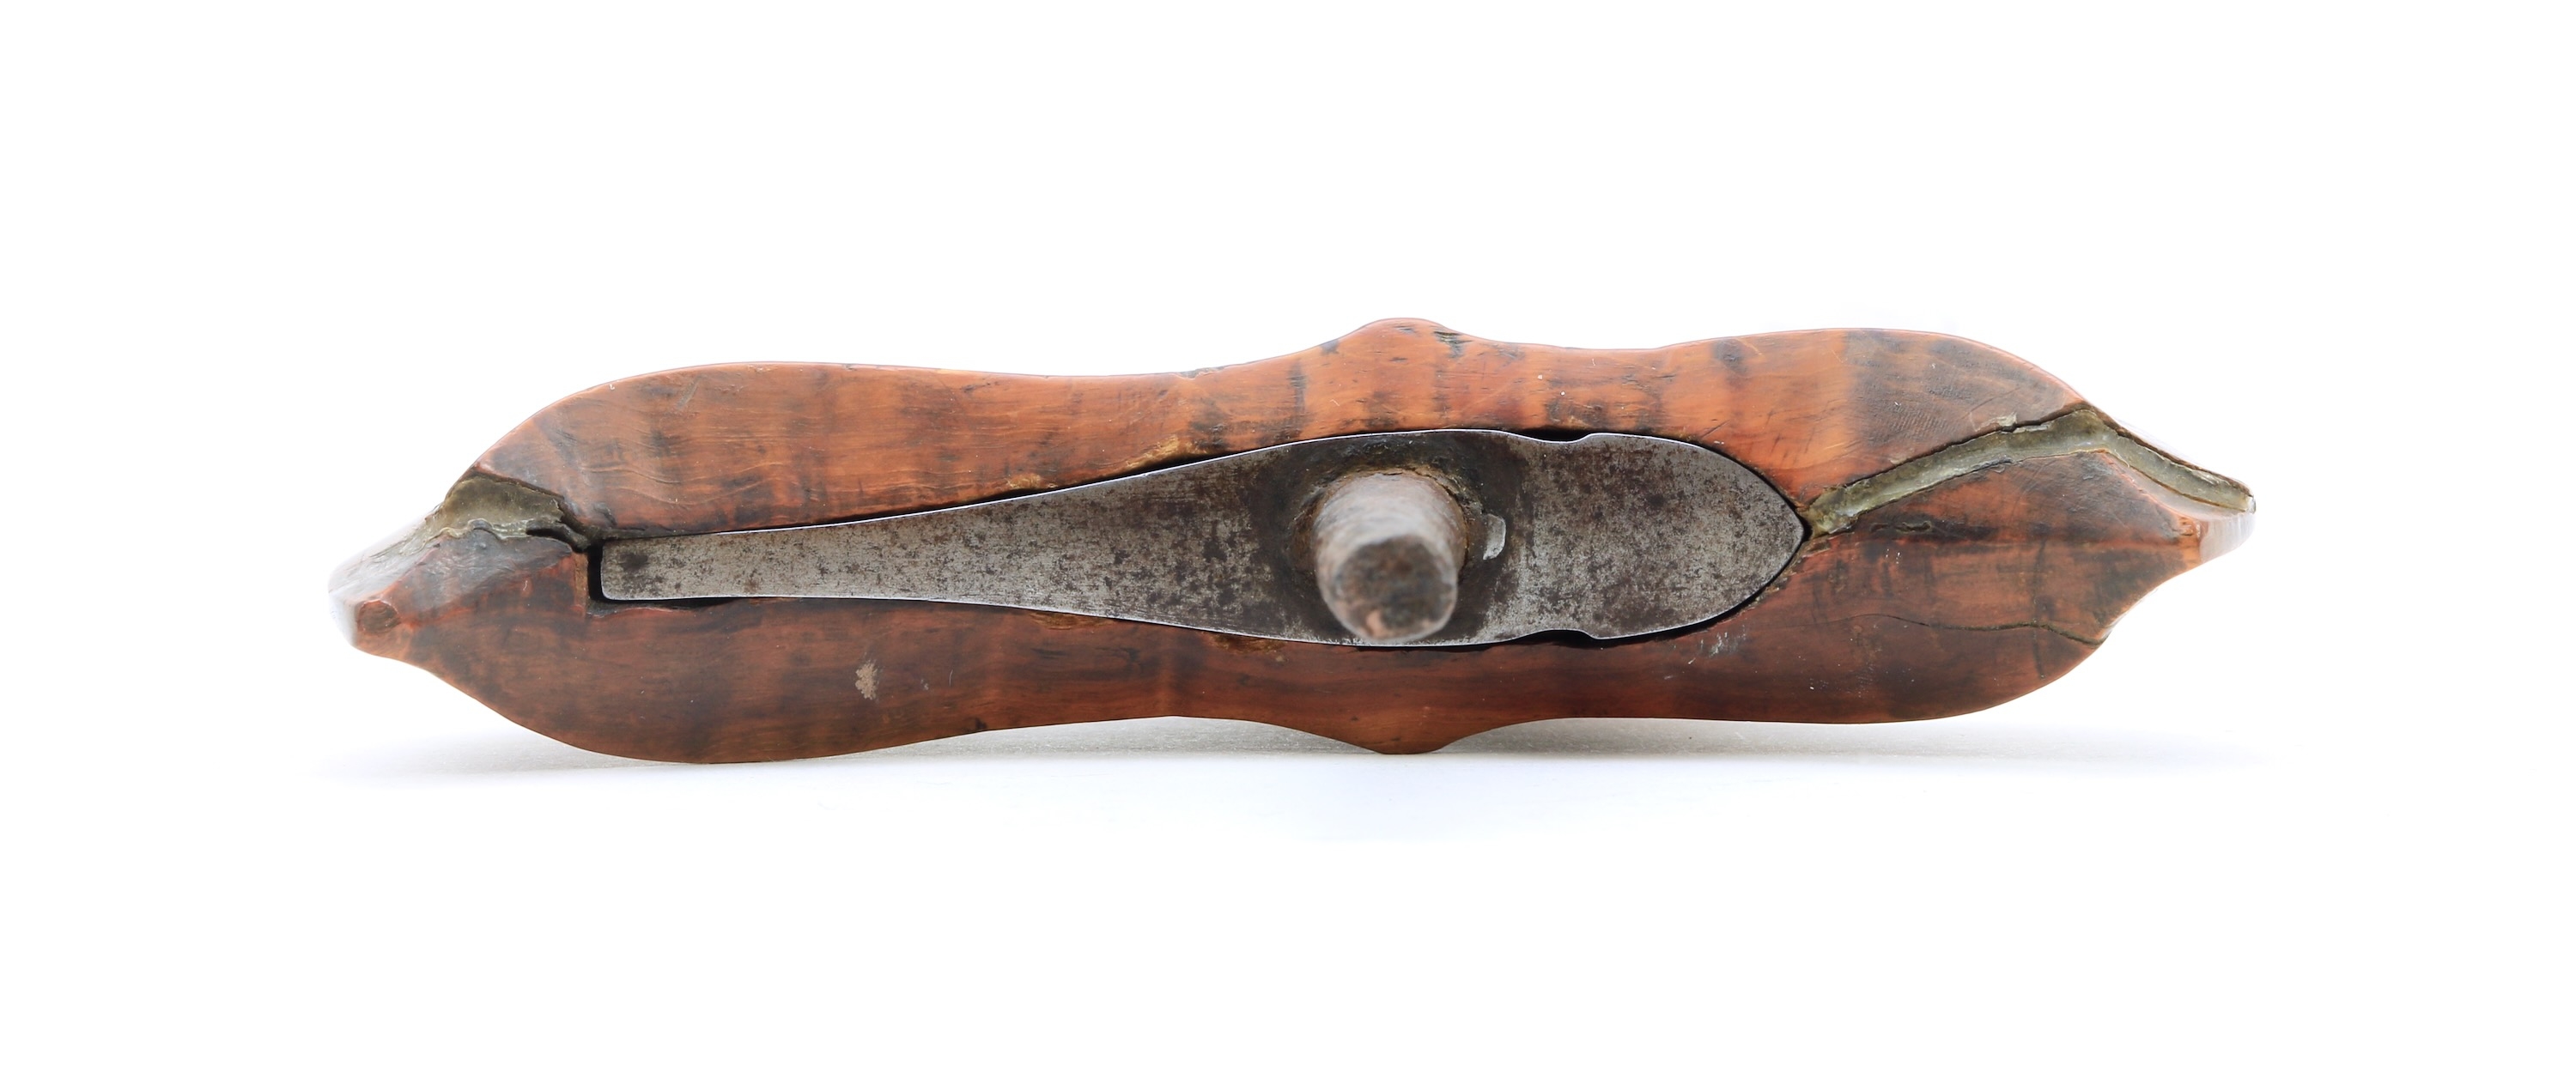 Sumatran keris panjang with European blade